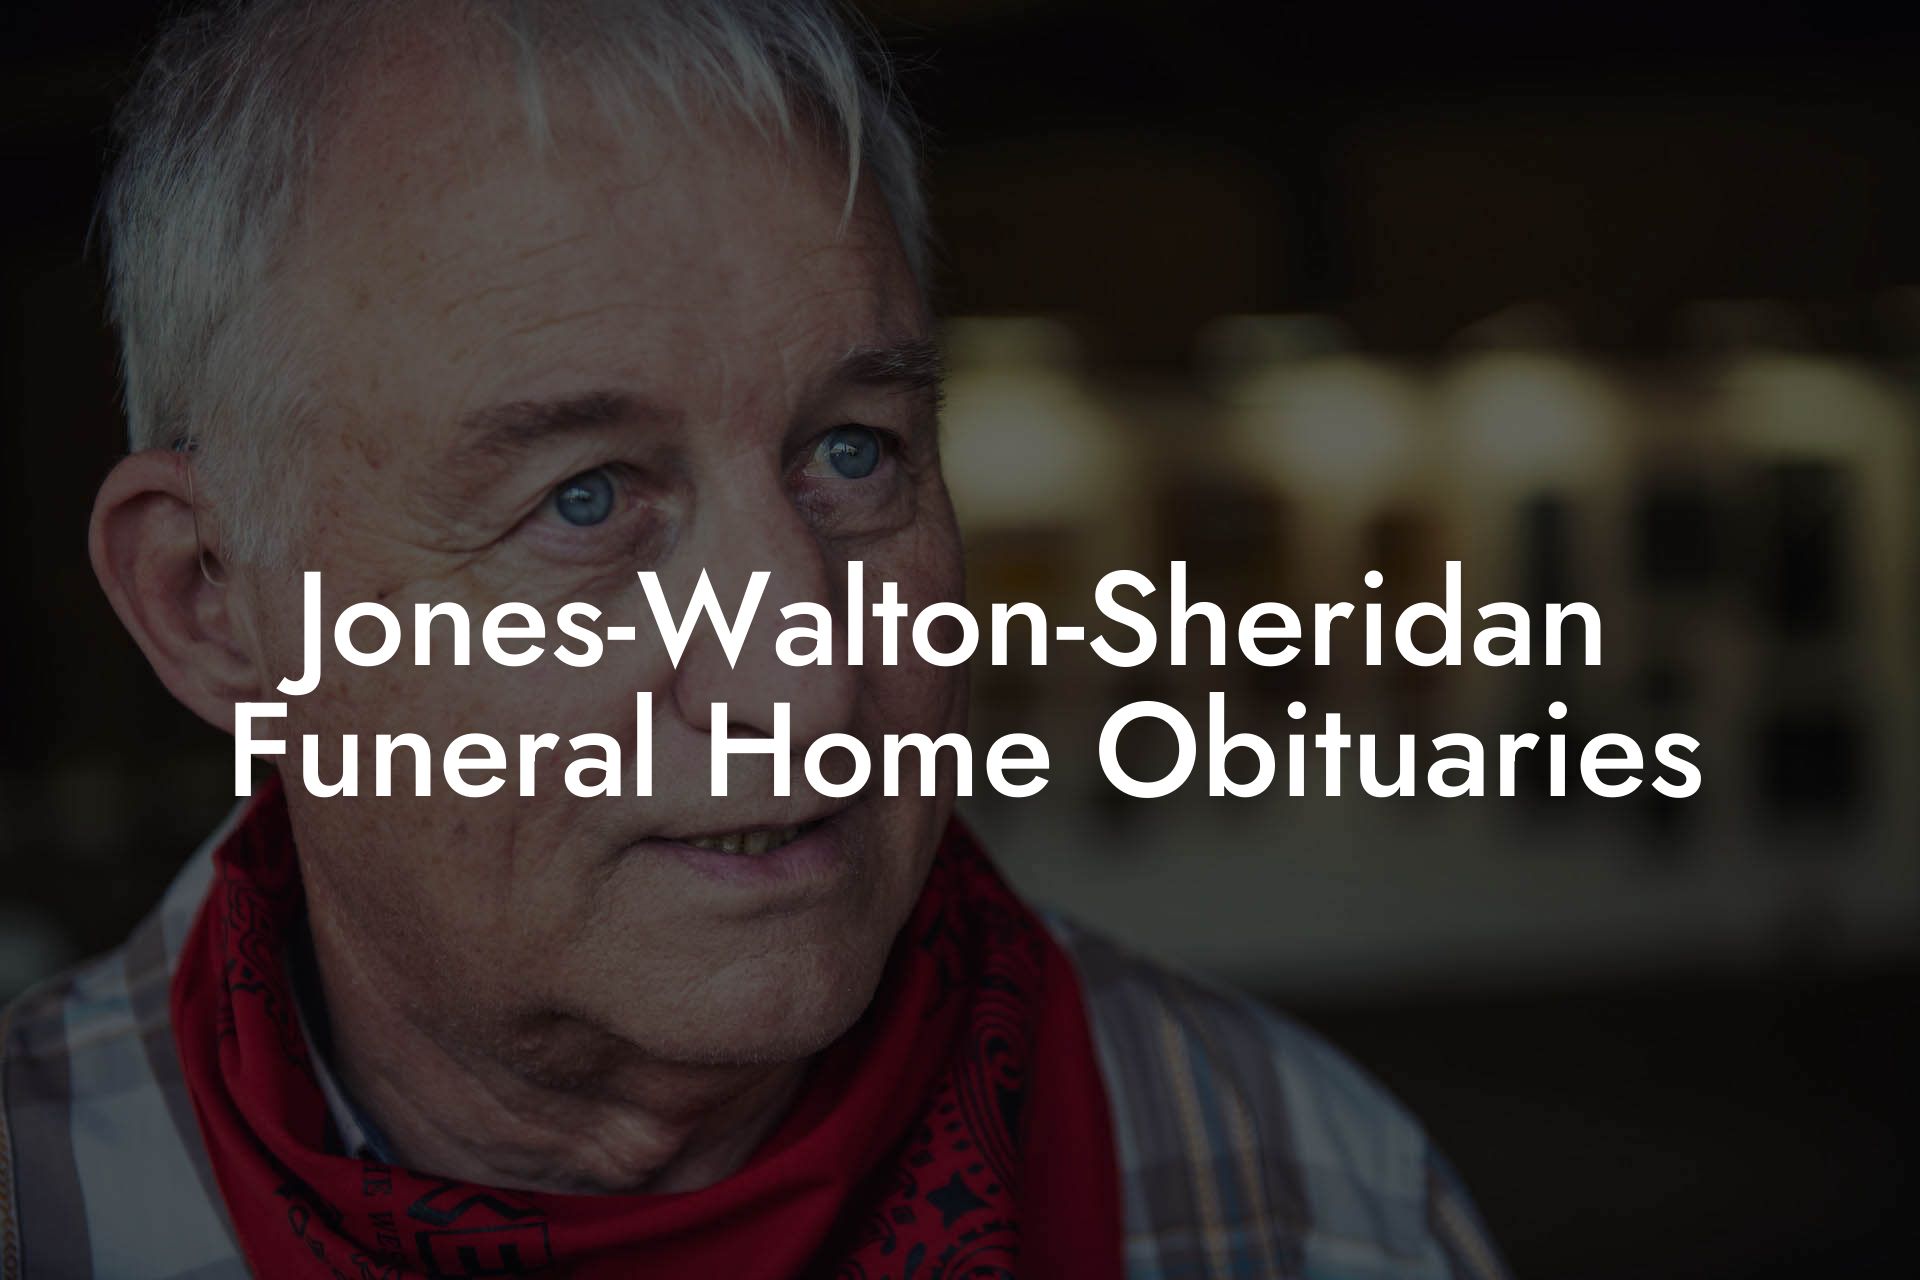 Jones-Walton-Sheridan Funeral Home Obituaries